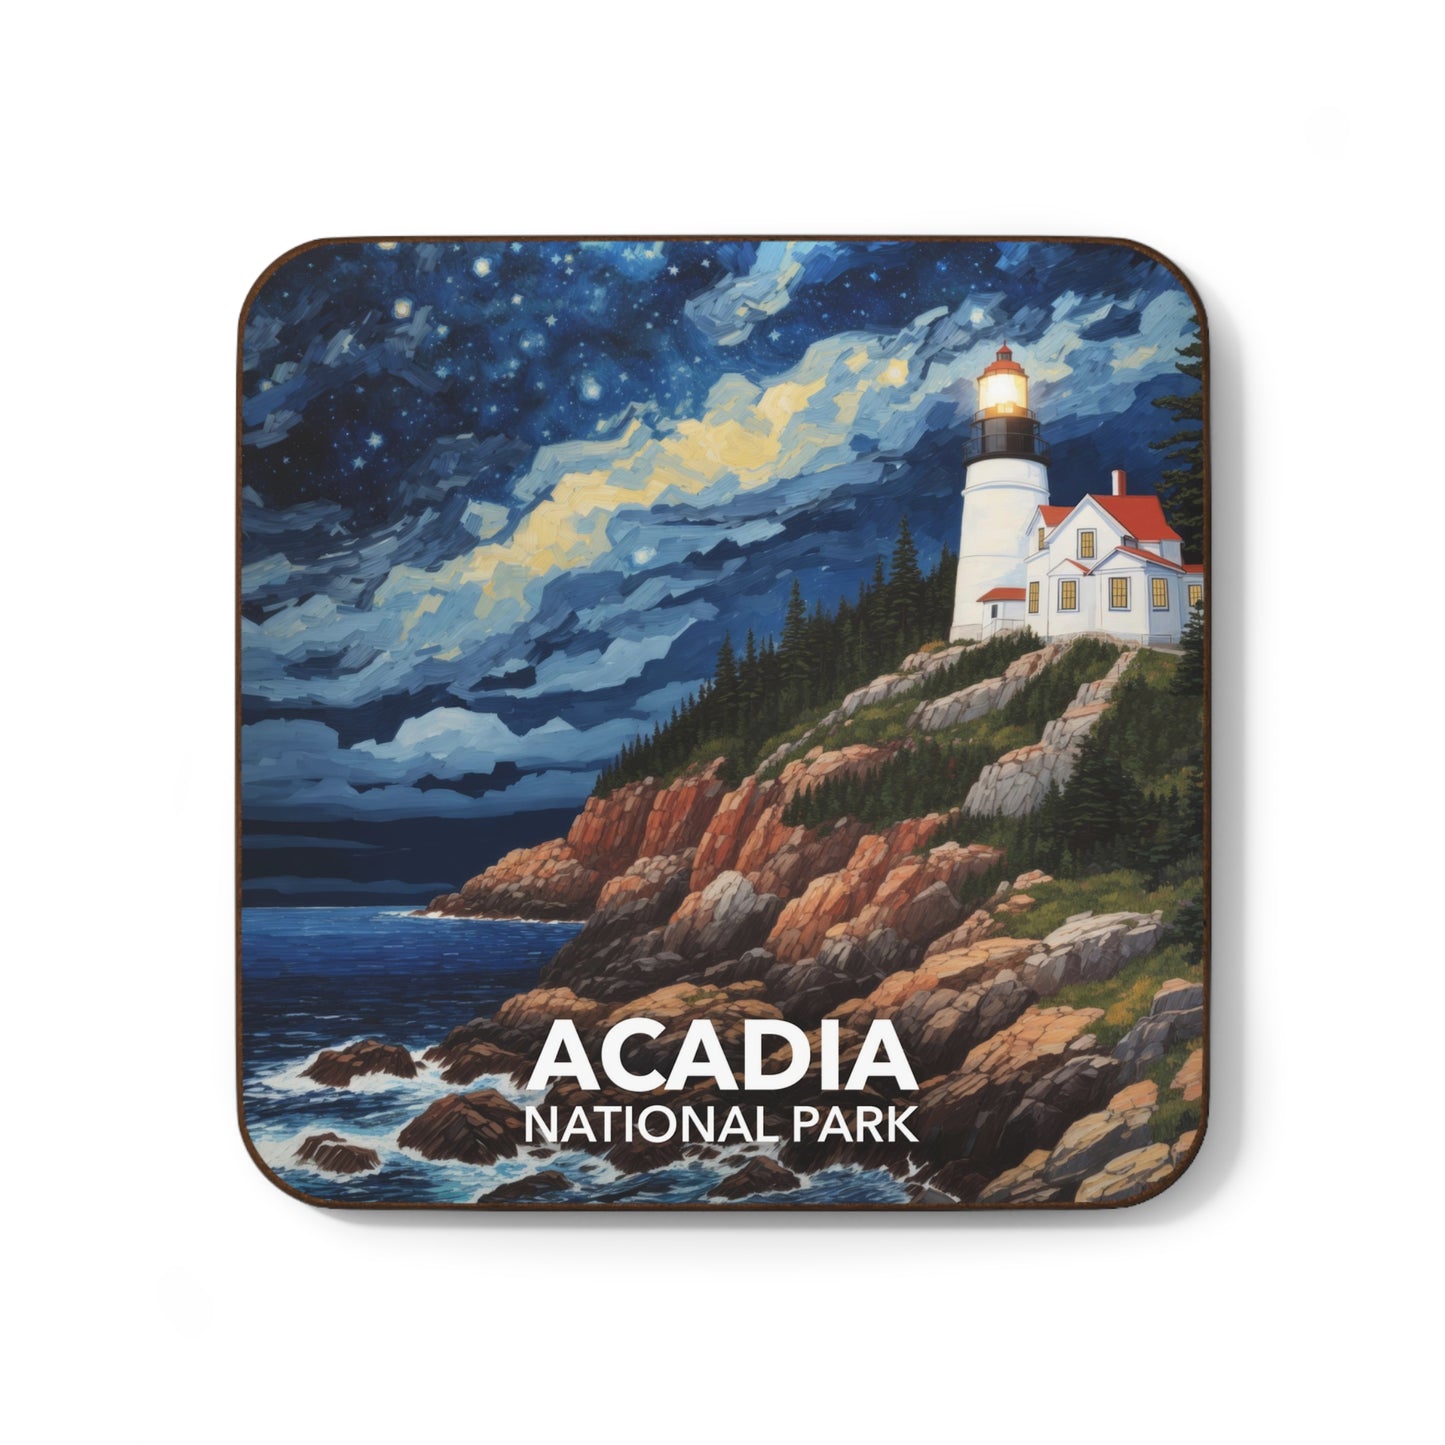 Acadia National Park Coaster - The Starry Night